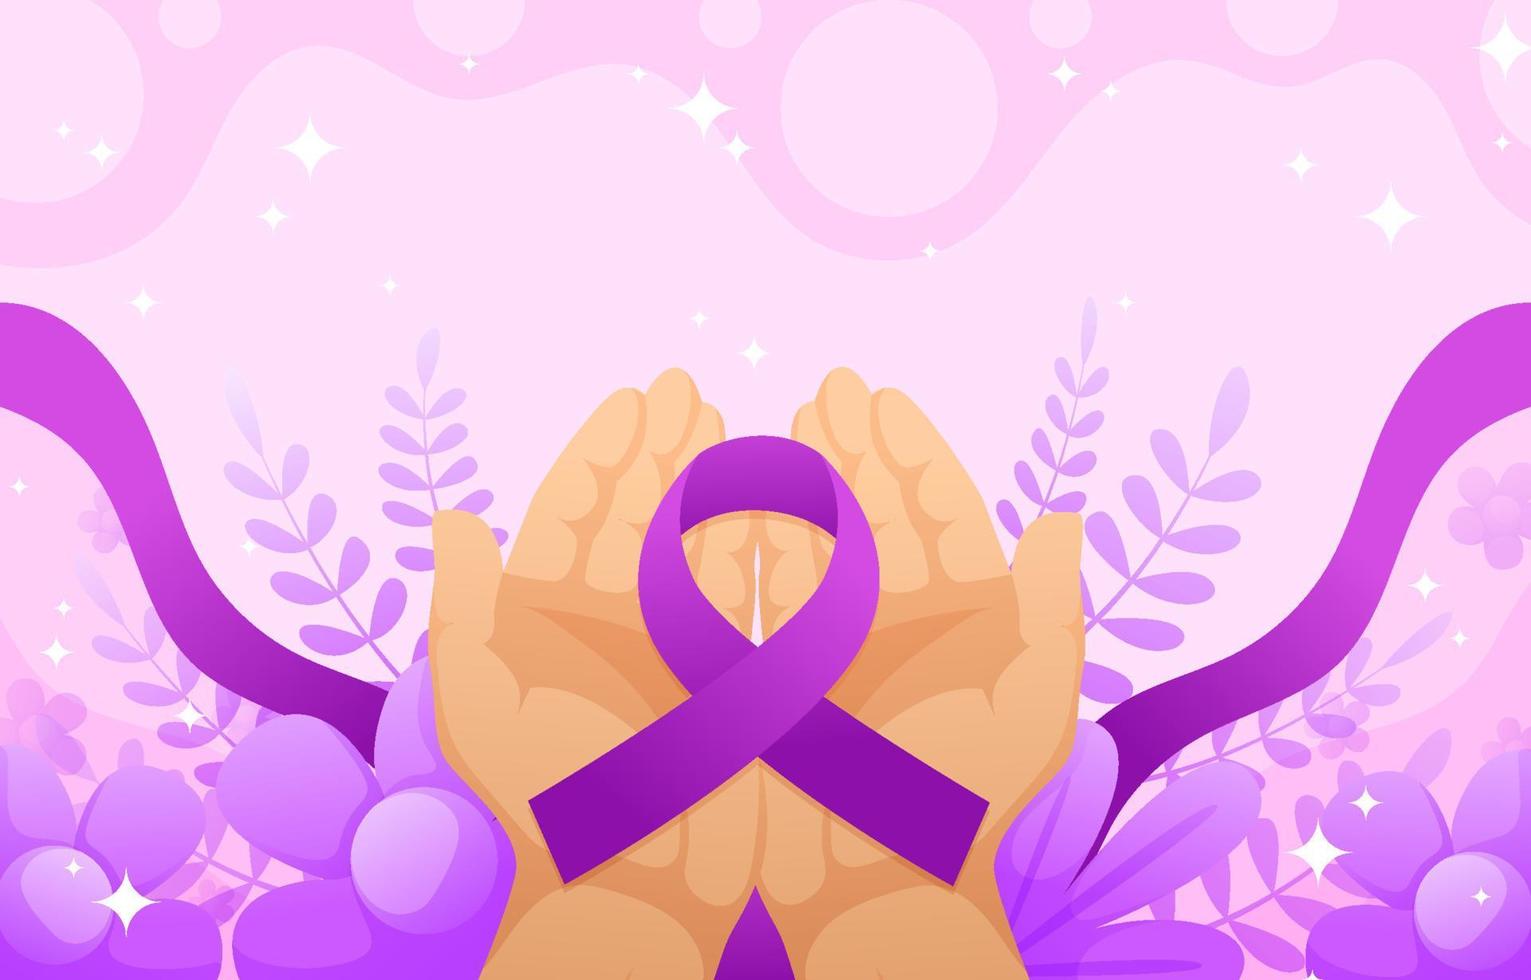 Cancer Survivor Day Background Concept vector